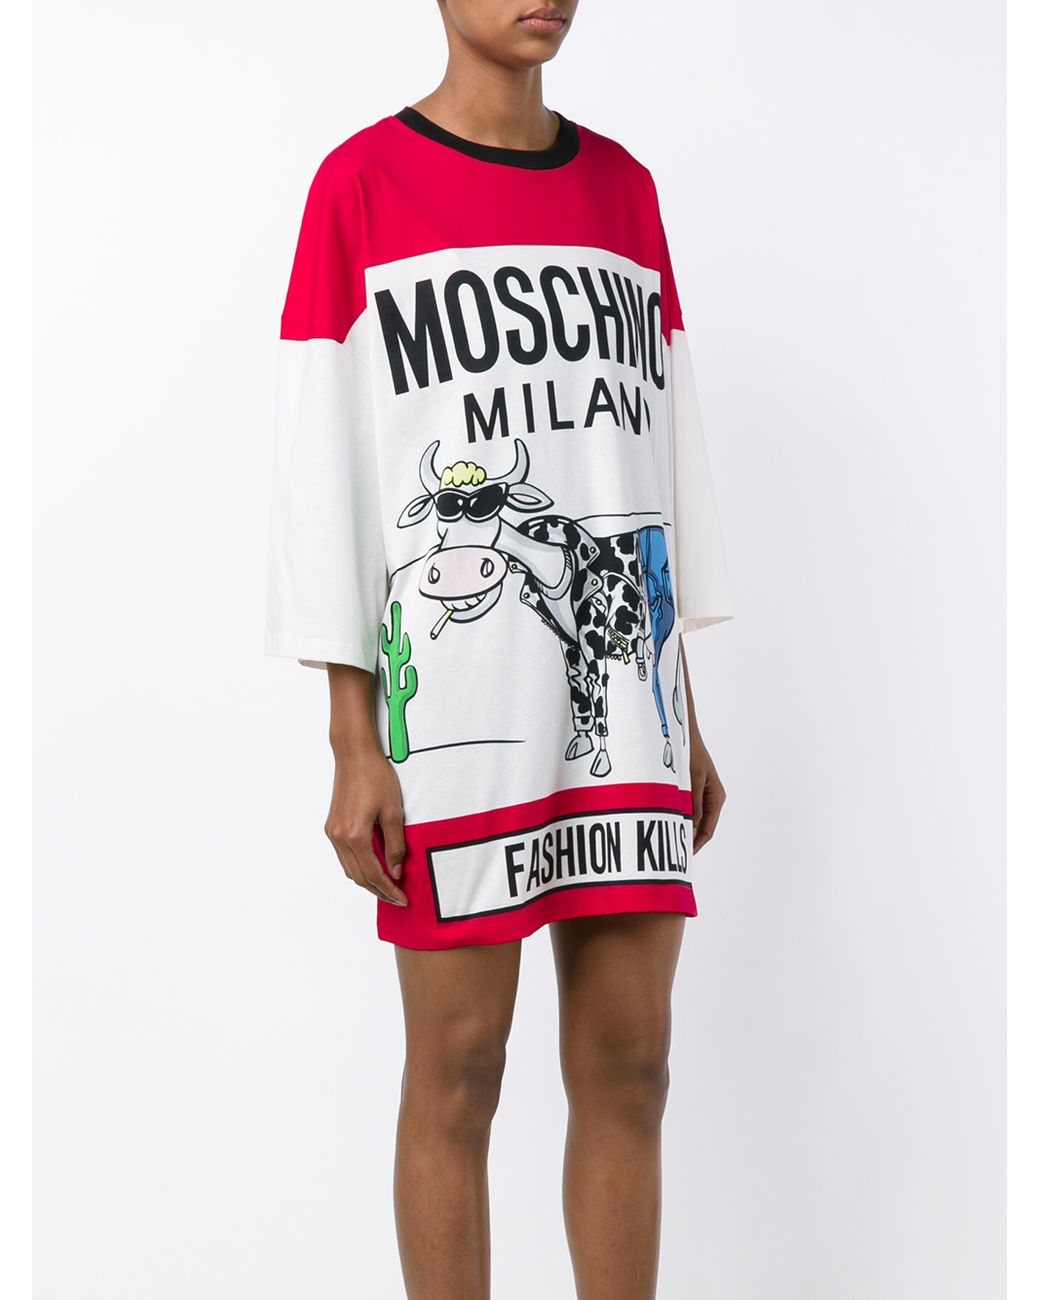 Moschino Fashion Kills T-shirt Dress in Red | Lyst